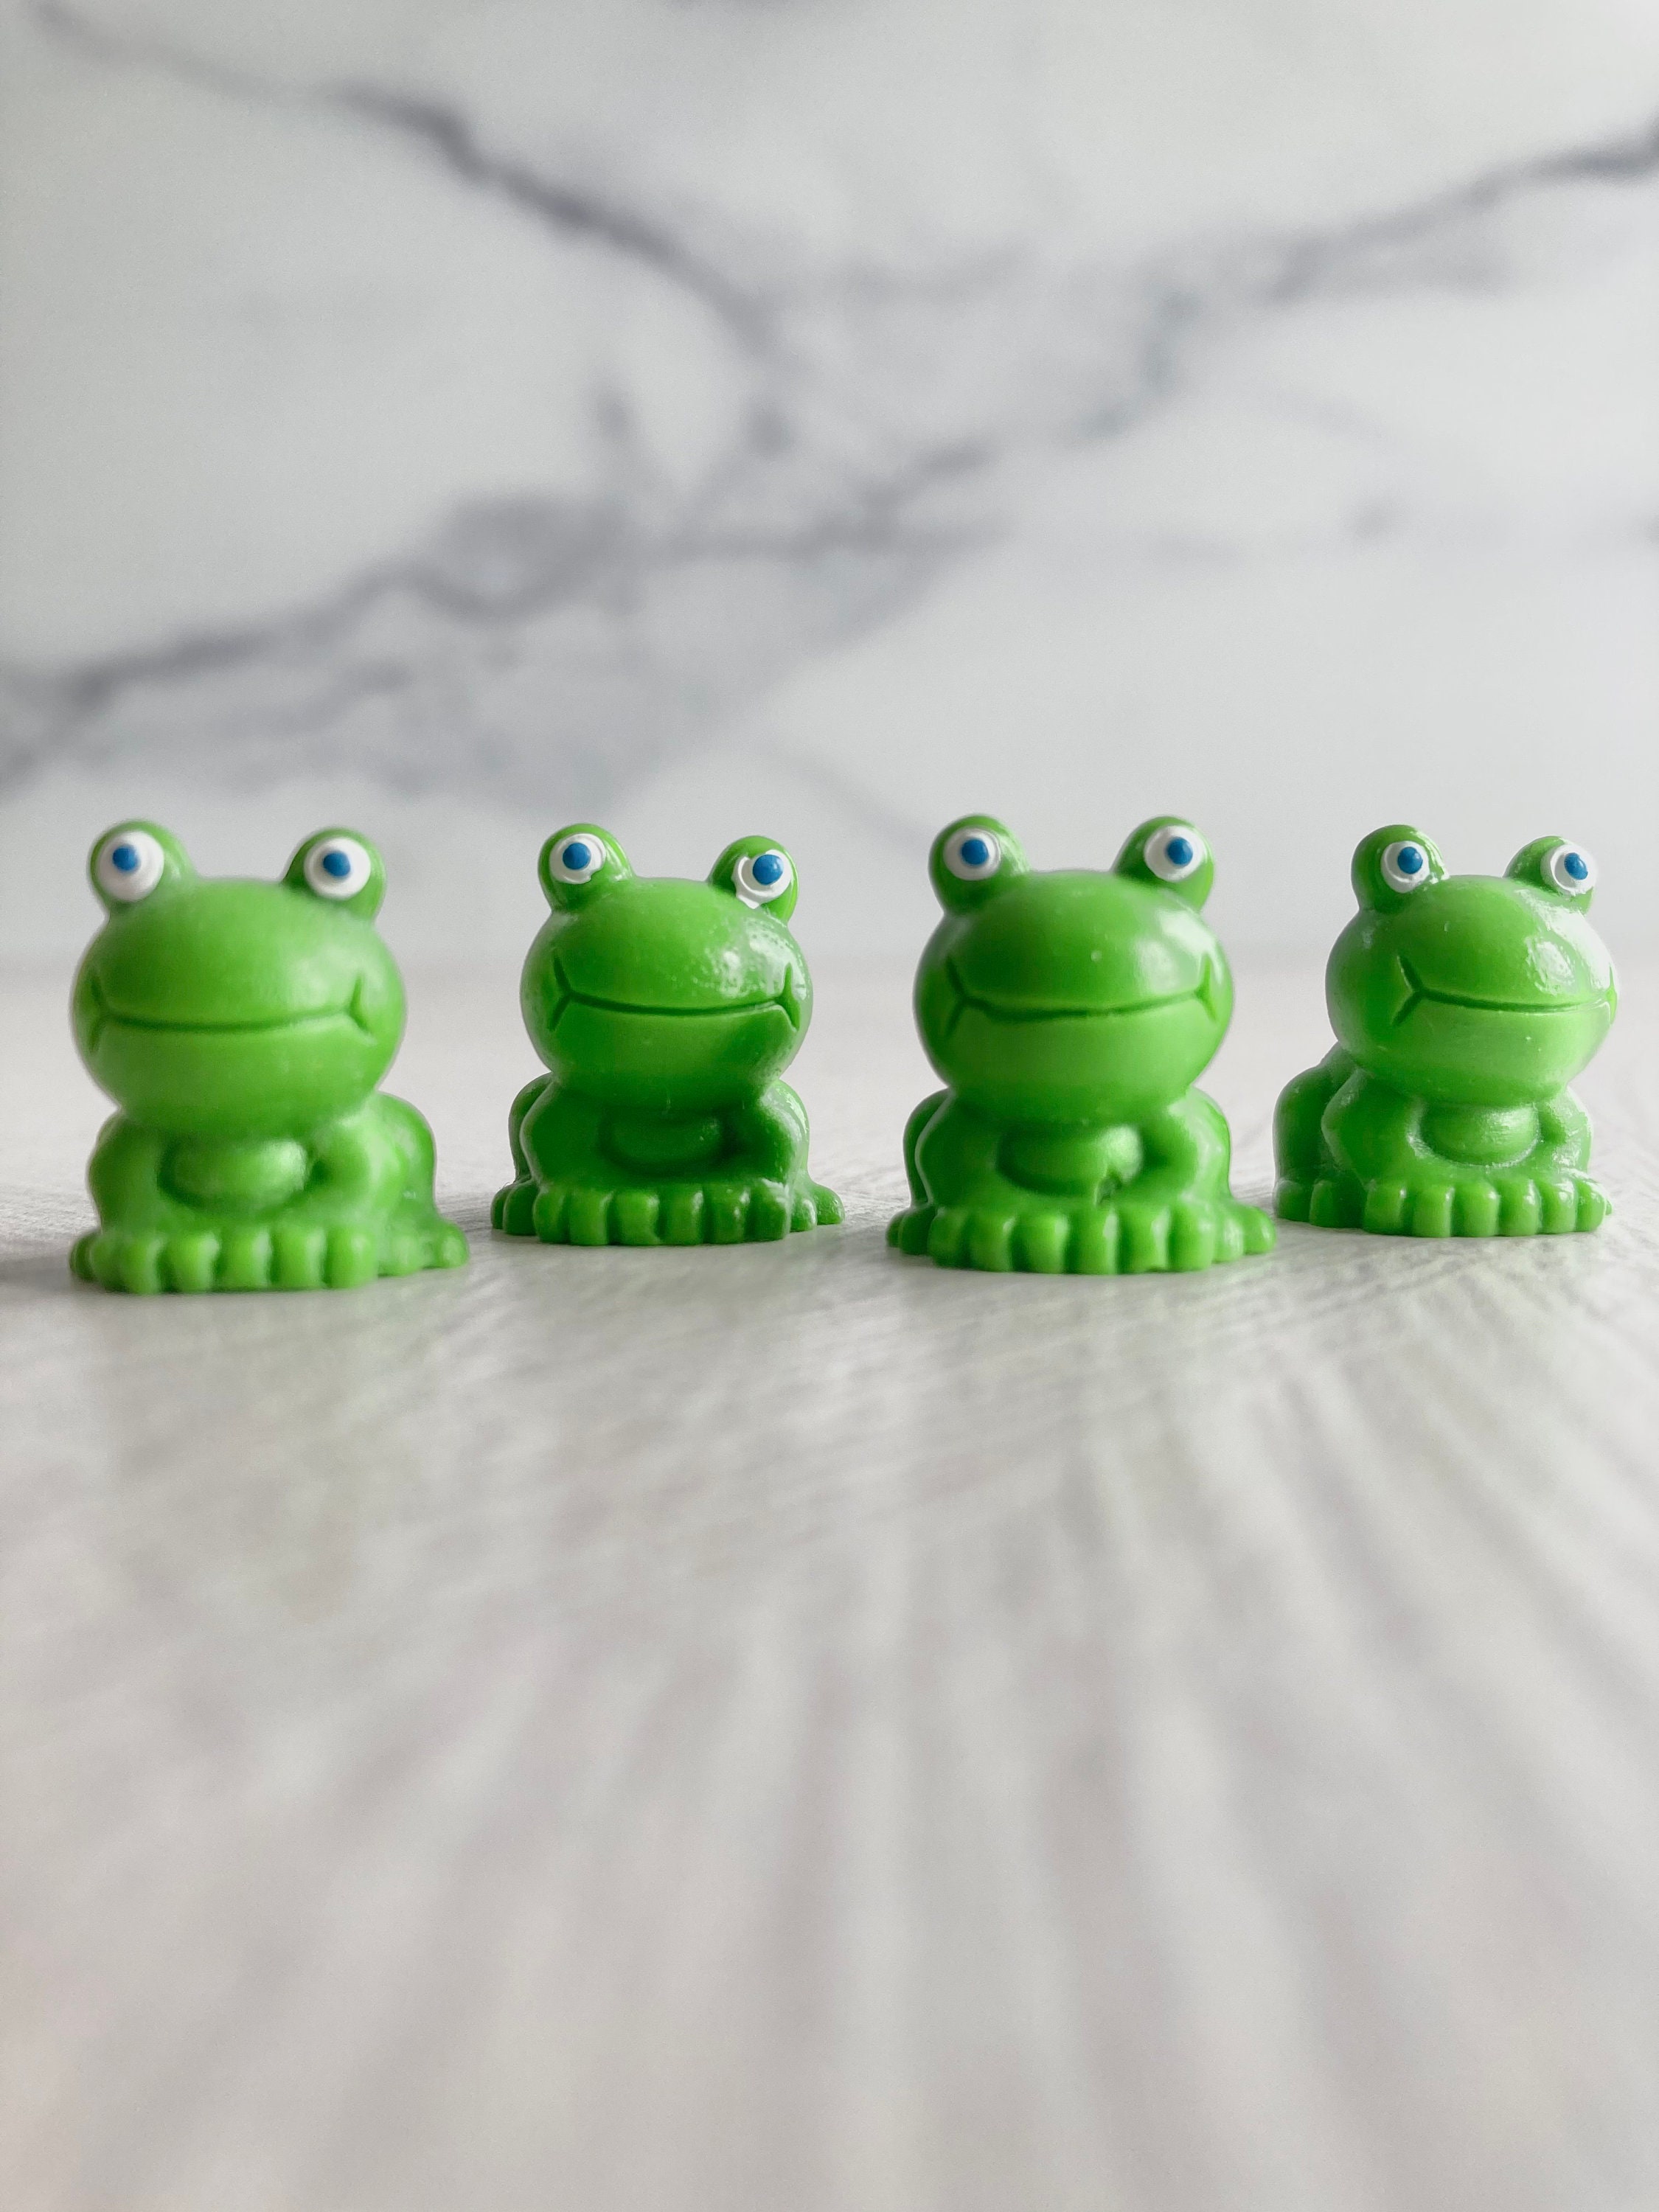 50 Pcs Mini Frog Garden Decor Green Frog Figurines Miniature Home Décor Tiny  Plastic Frogs Fairy Garden Decor